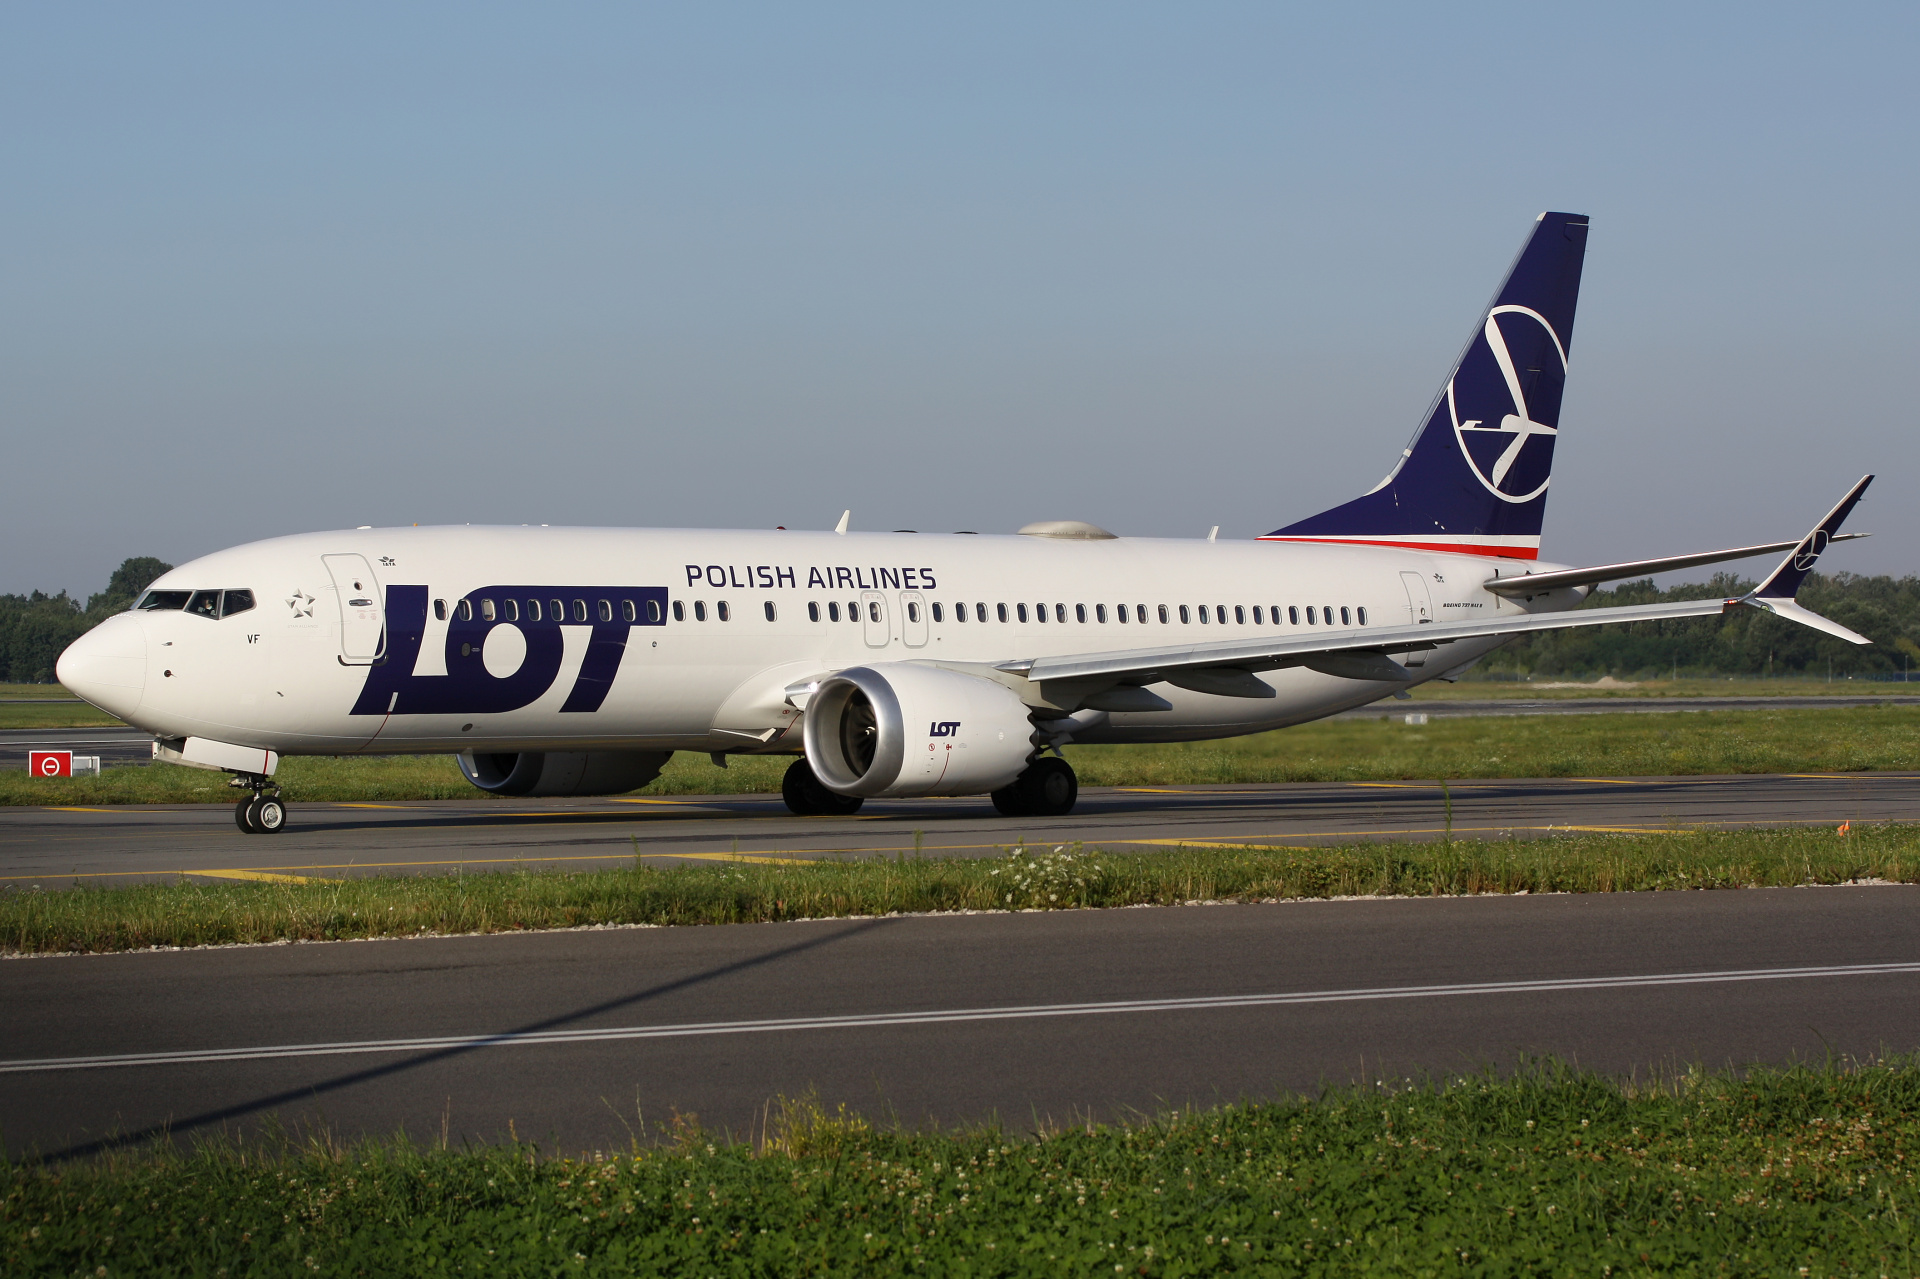 SP-LVF (Aircraft » EPWA Spotting » Boeing 737-8 MAX » LOT Polish Airlines)